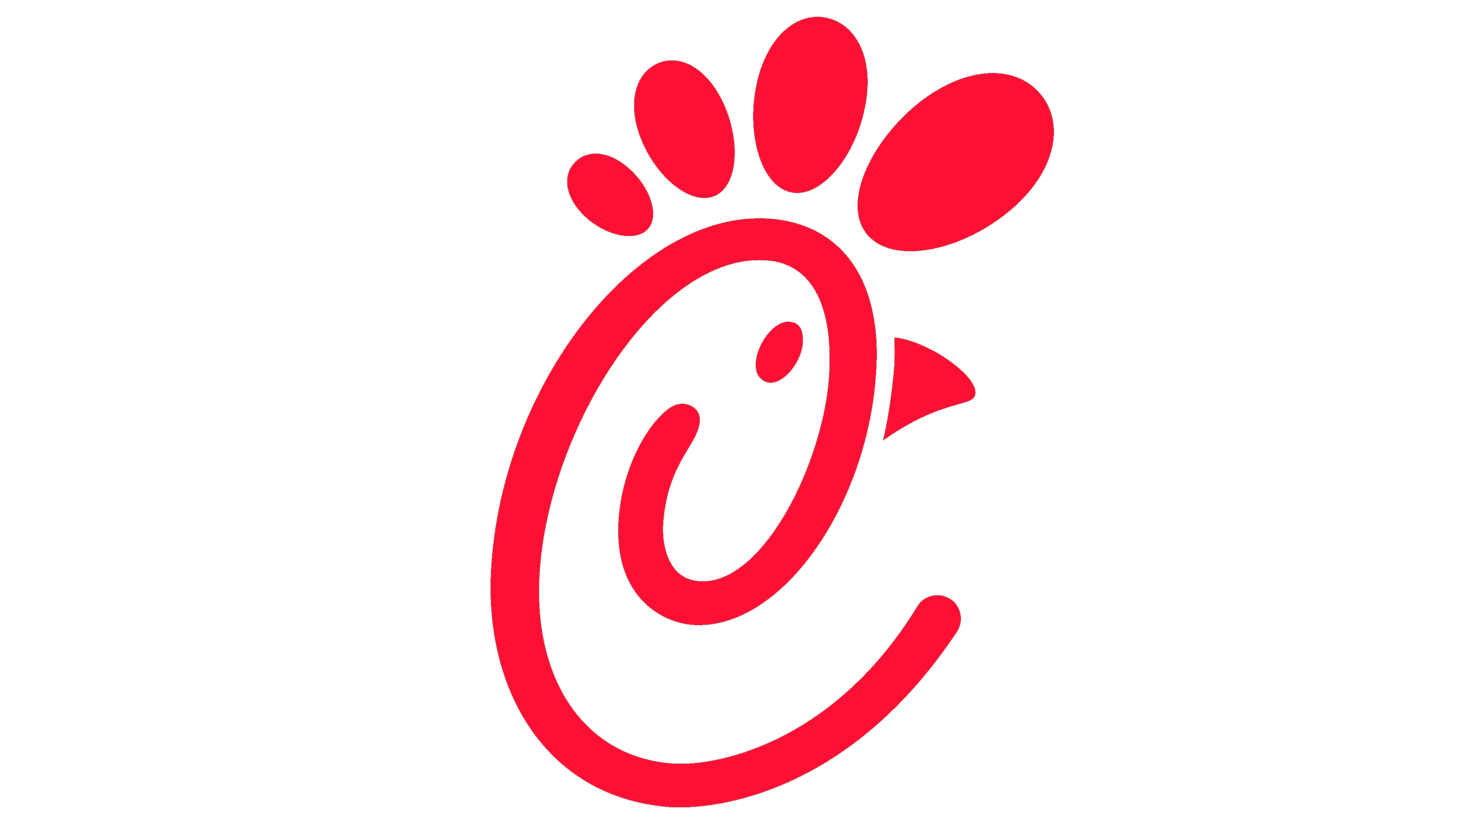 Chick fil a symbol